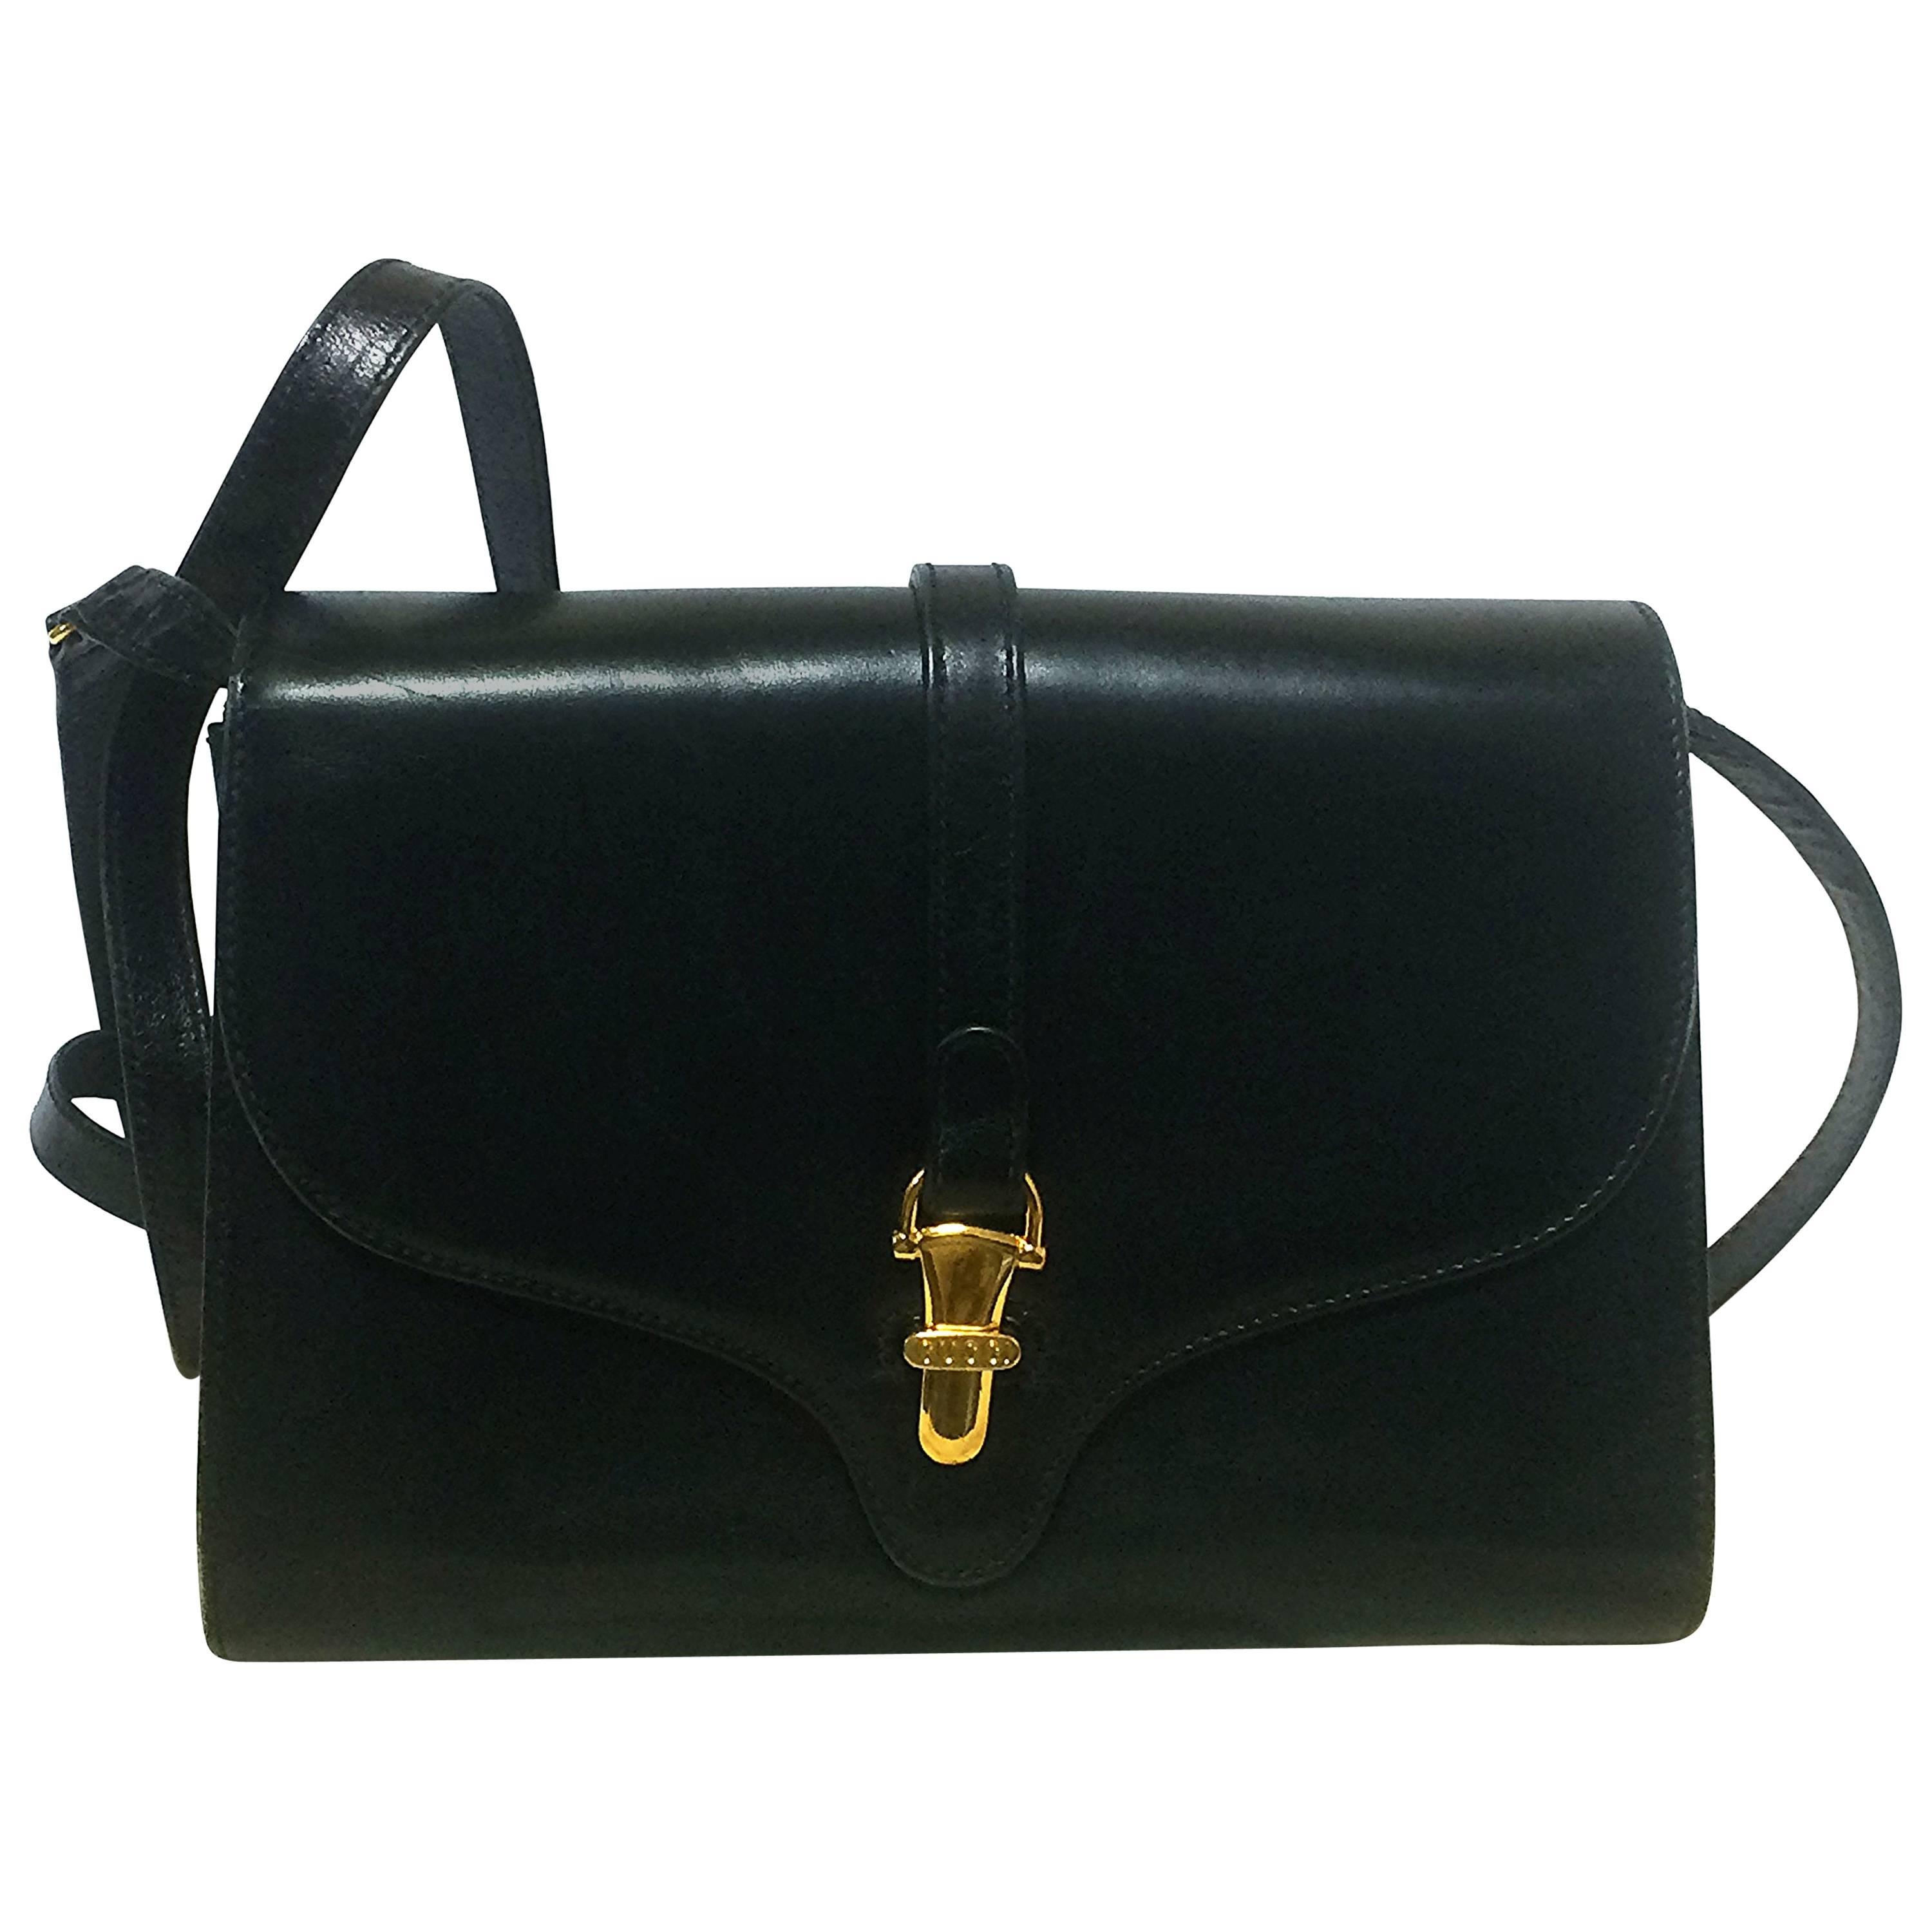 80’s Vintage Gucci black leather clutch shoulder bag with logo motif closure.